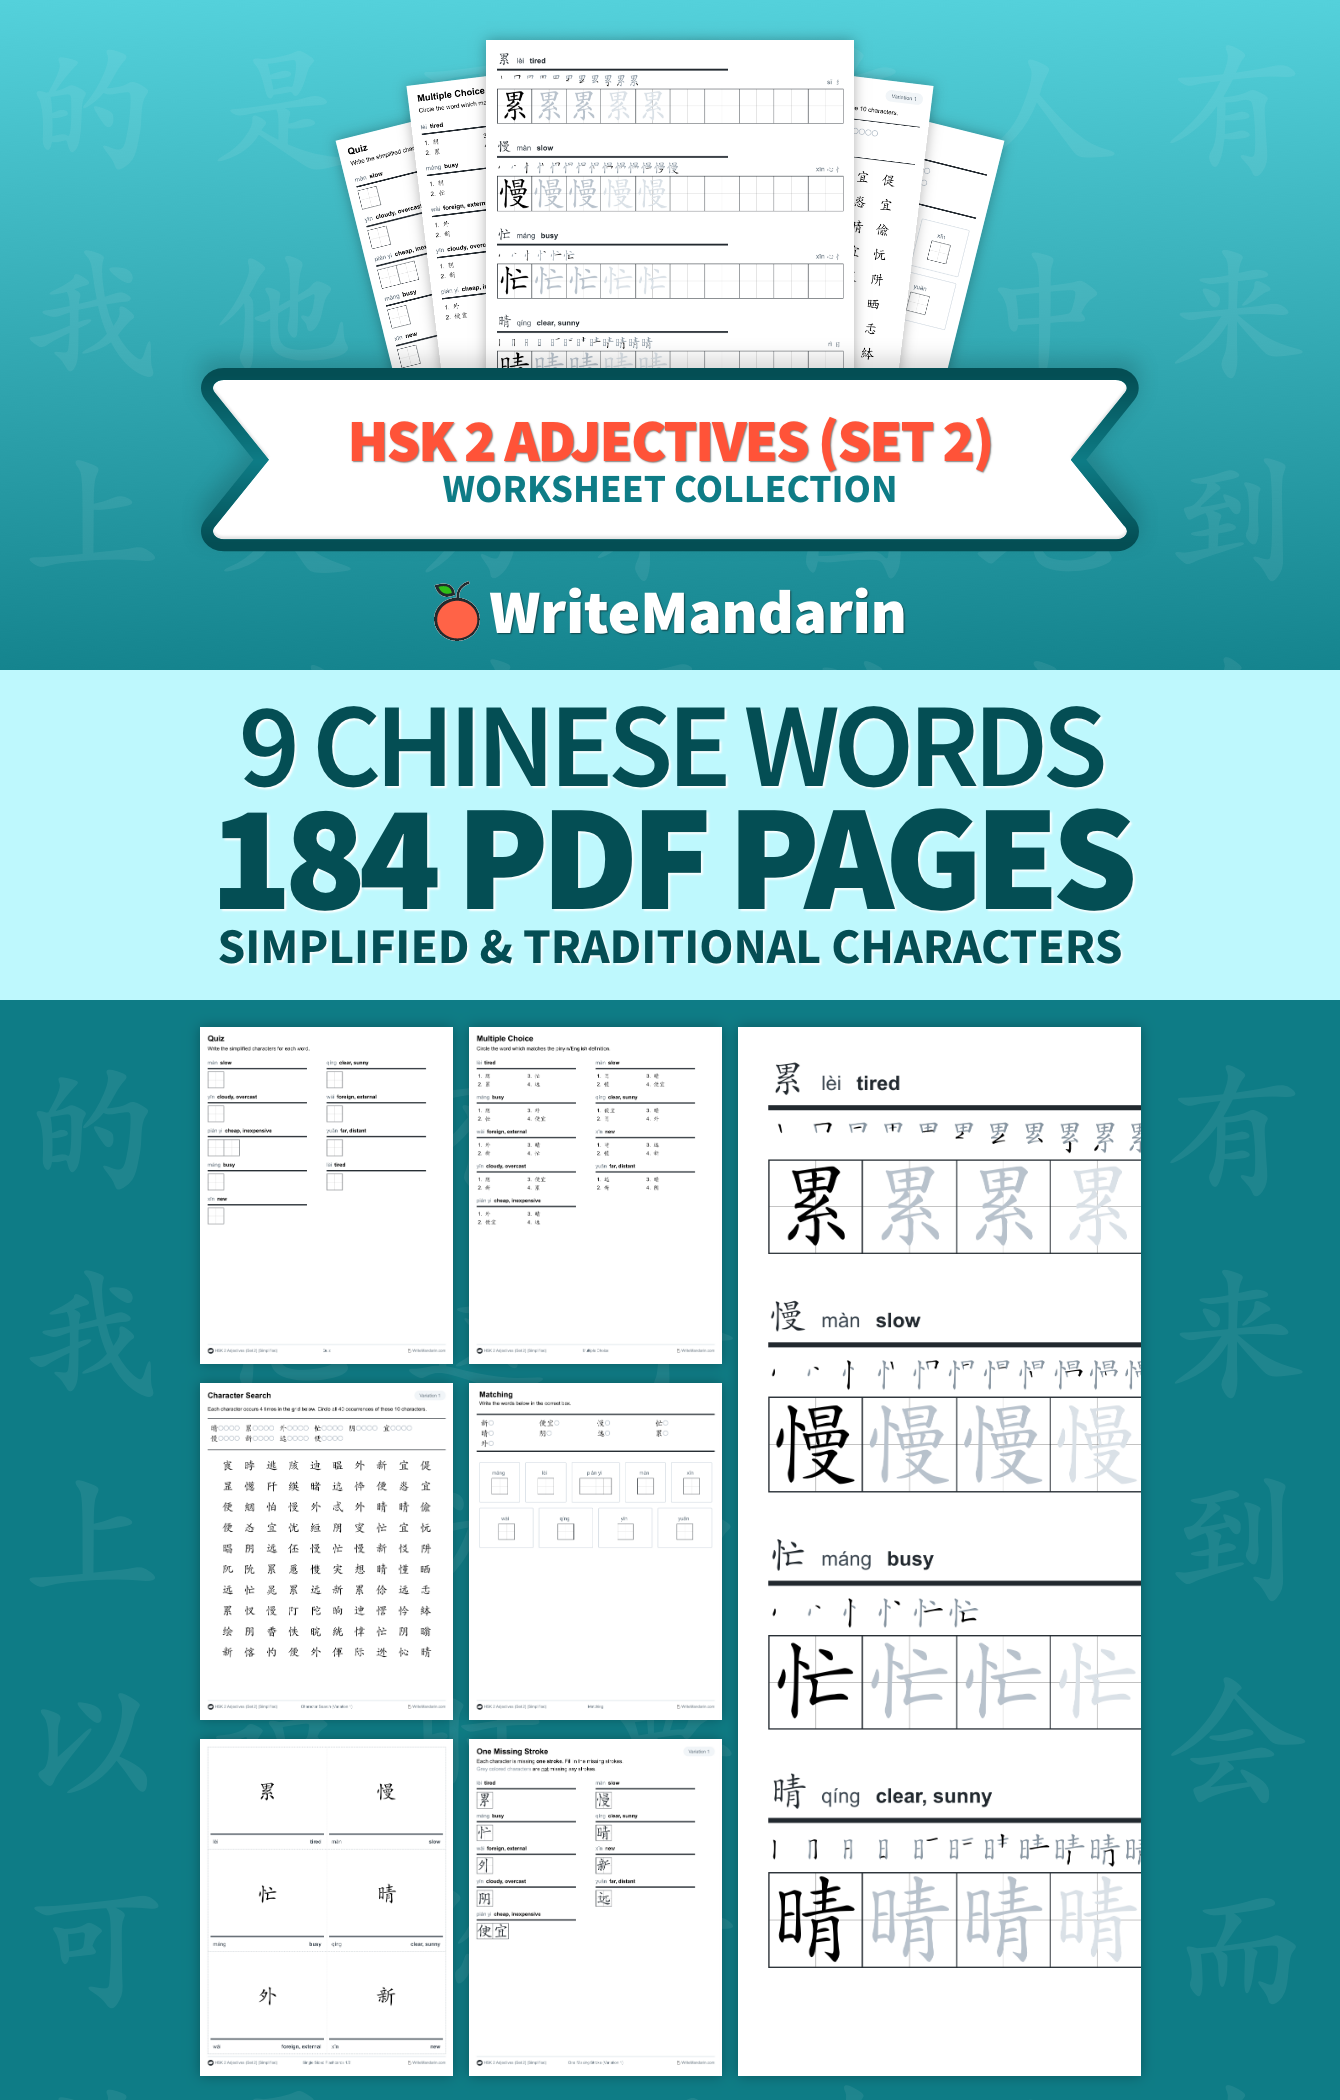 Preview image of HSK 2 Adjectives (Set 2) worksheet collection